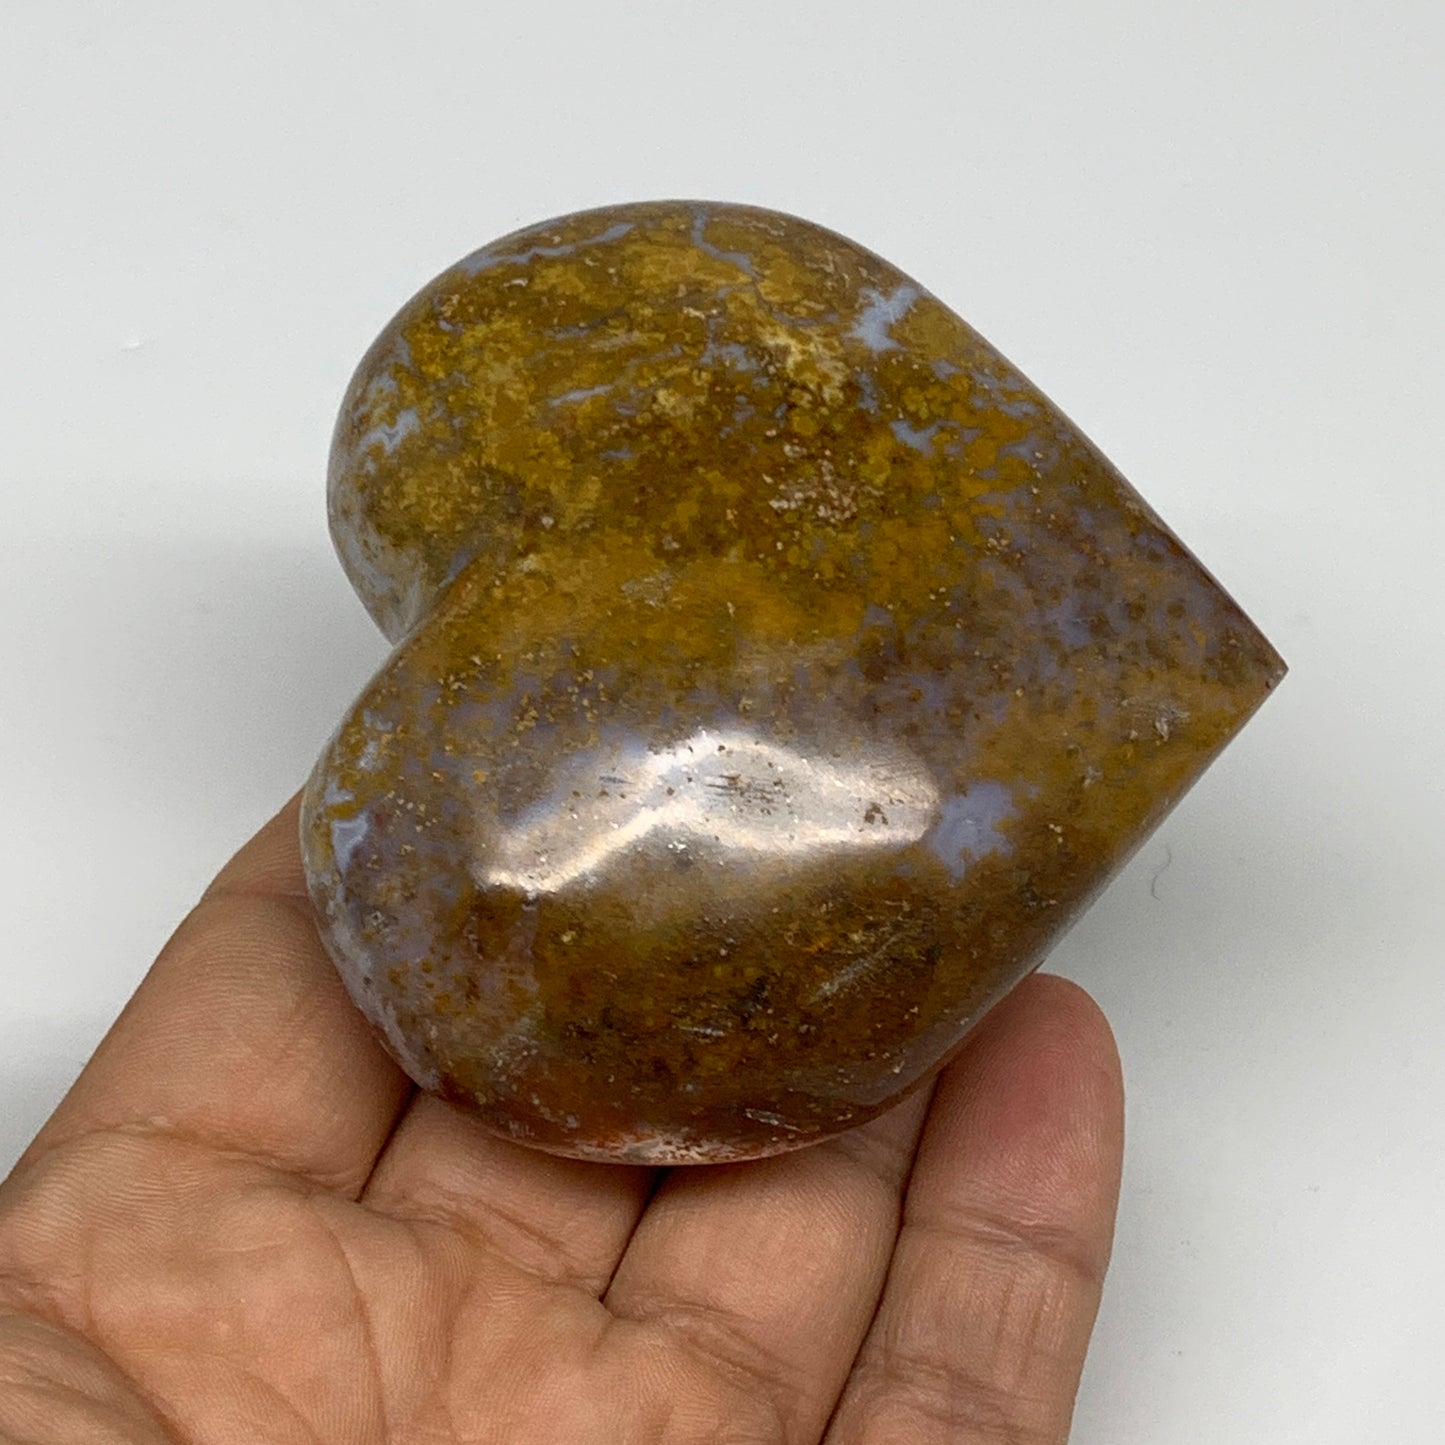 0.40 lbs, 2.7"x2.8"x1.2" Ocean Jasper Heart Polished Healing Crystal, B30854